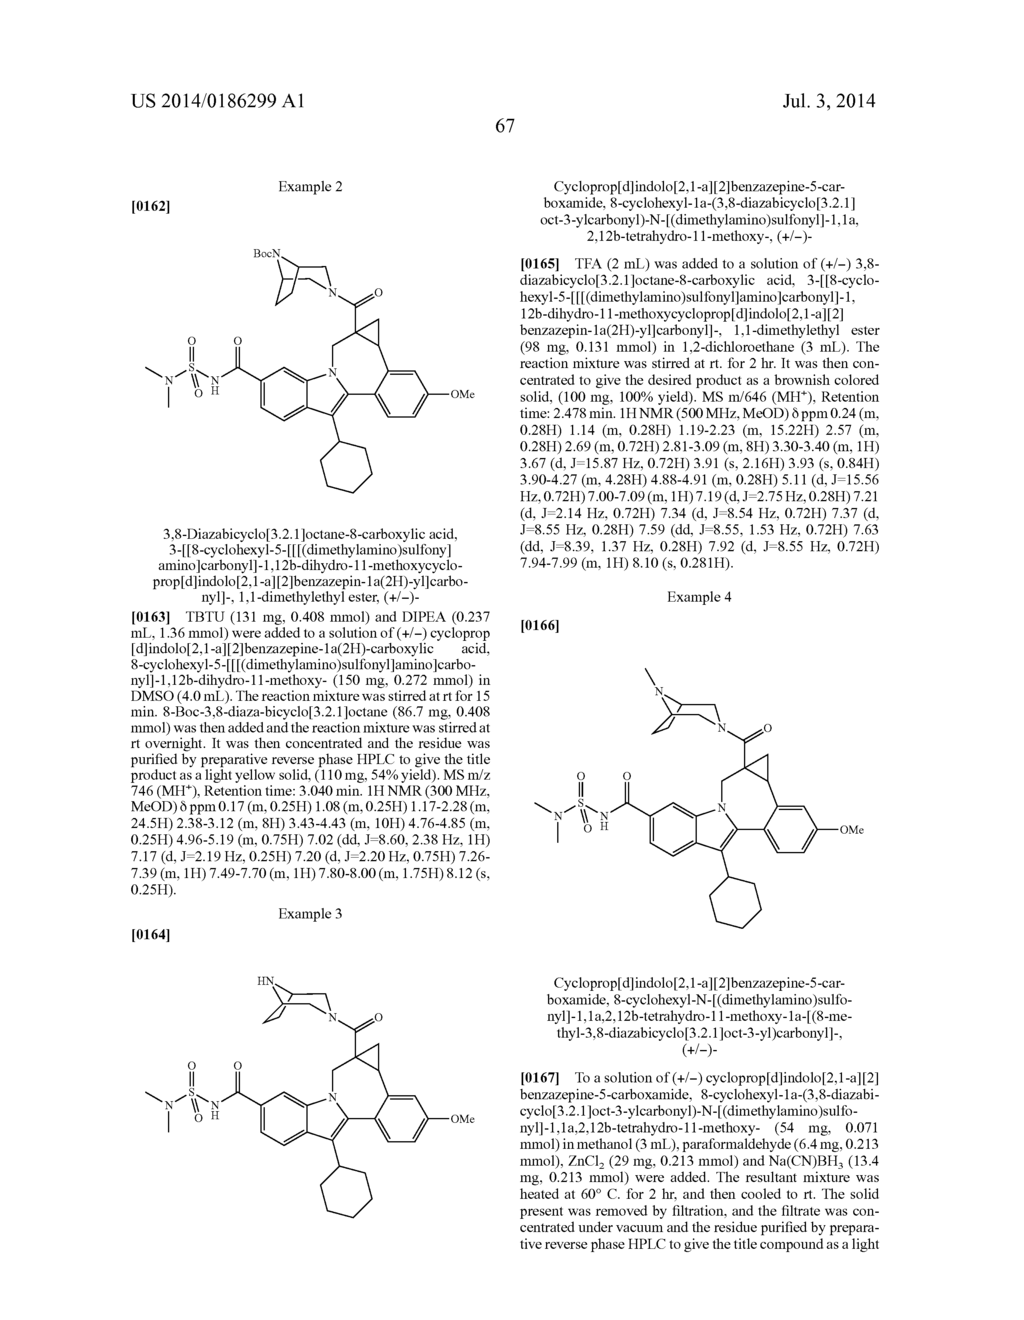 Cyclopropyl Fused Indolobenzazepine HCV NS5B Inhibitors - diagram, schematic, and image 68